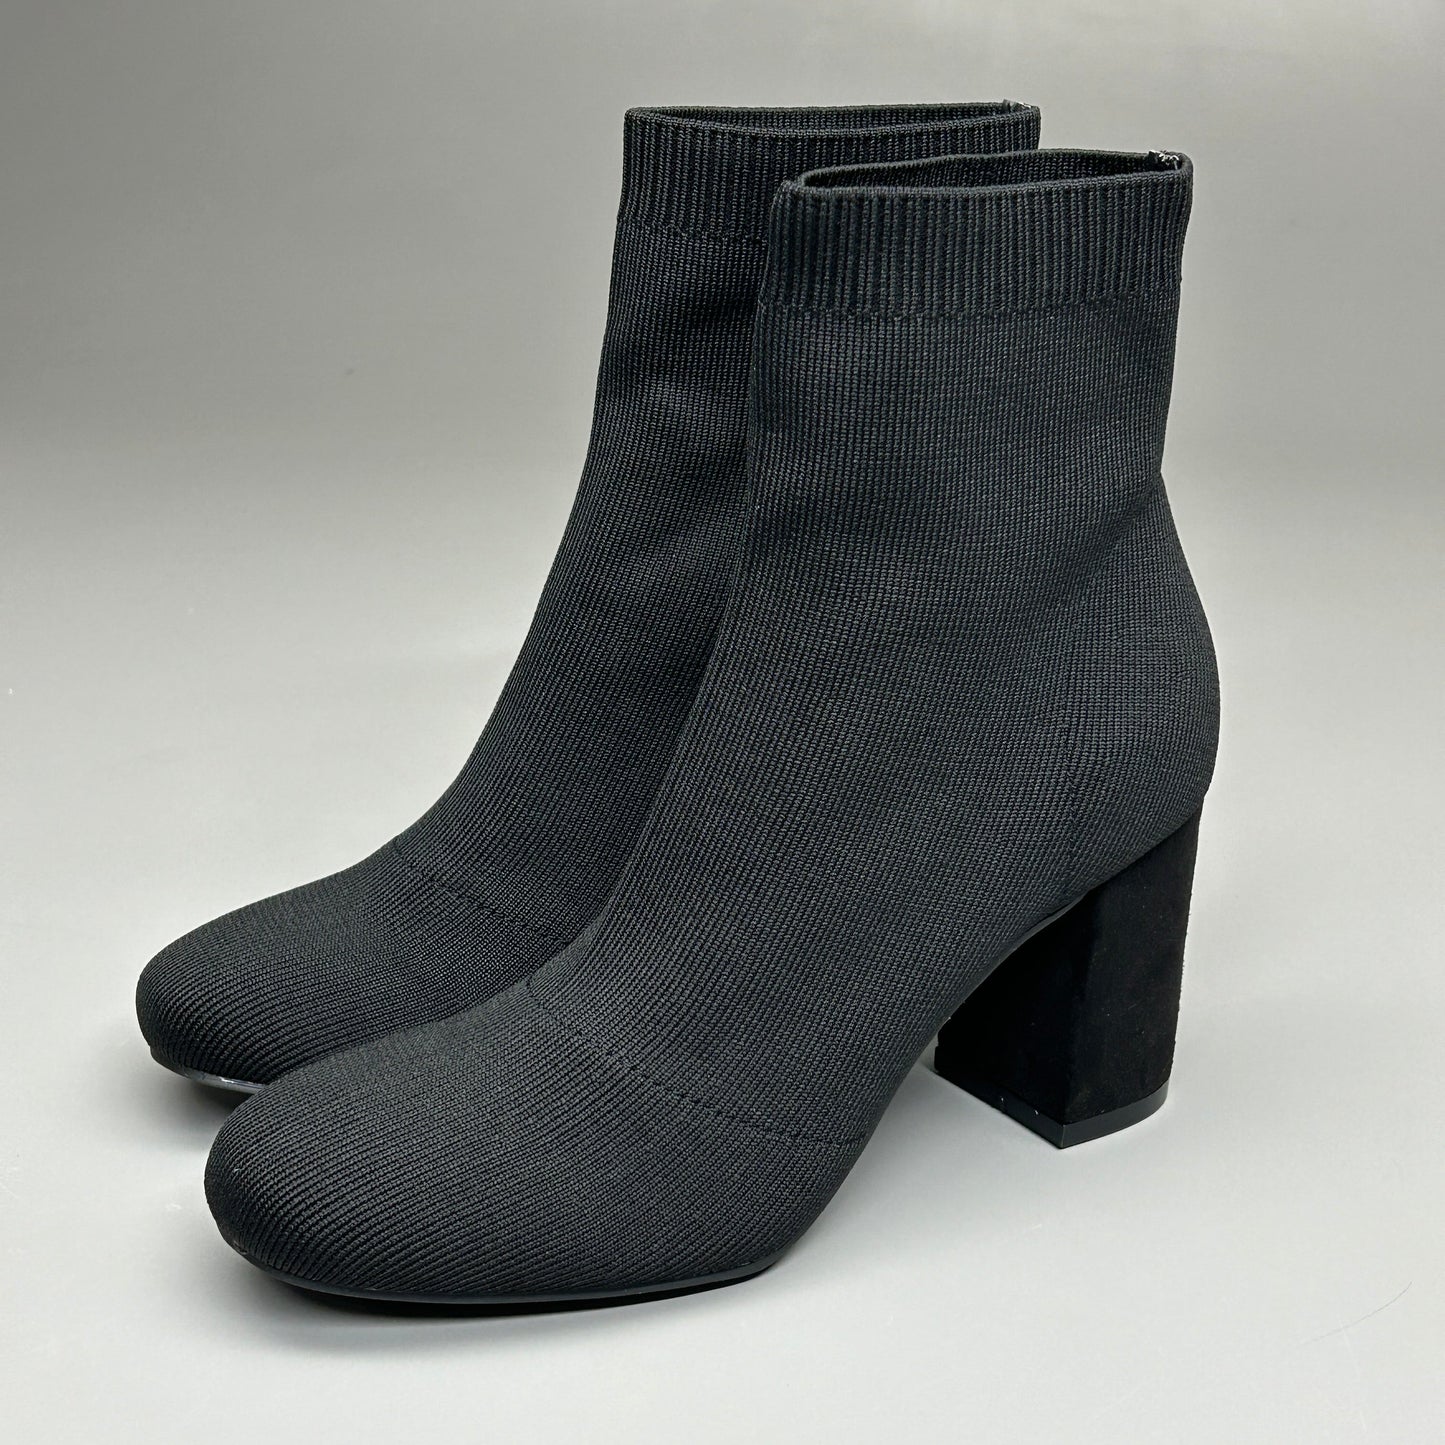 MIA Erika Fly Knit Booties Dress Boots Black 2” Heel Sz 13 GS7553115Y (New)